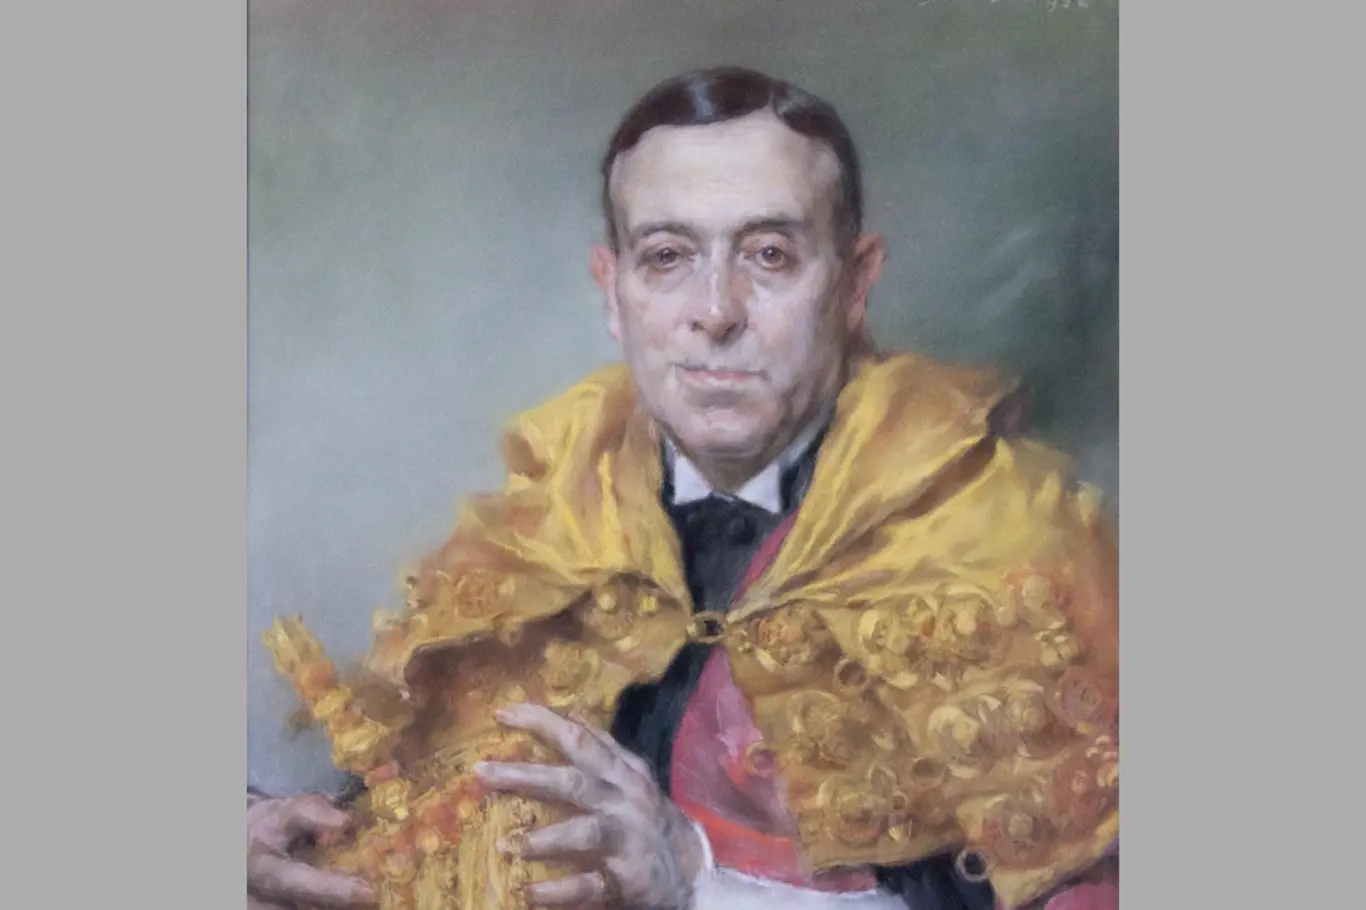 Portrét Egase Monize v doktorských talárech univerzity v Coimbře, 1932, autor José Malhoa